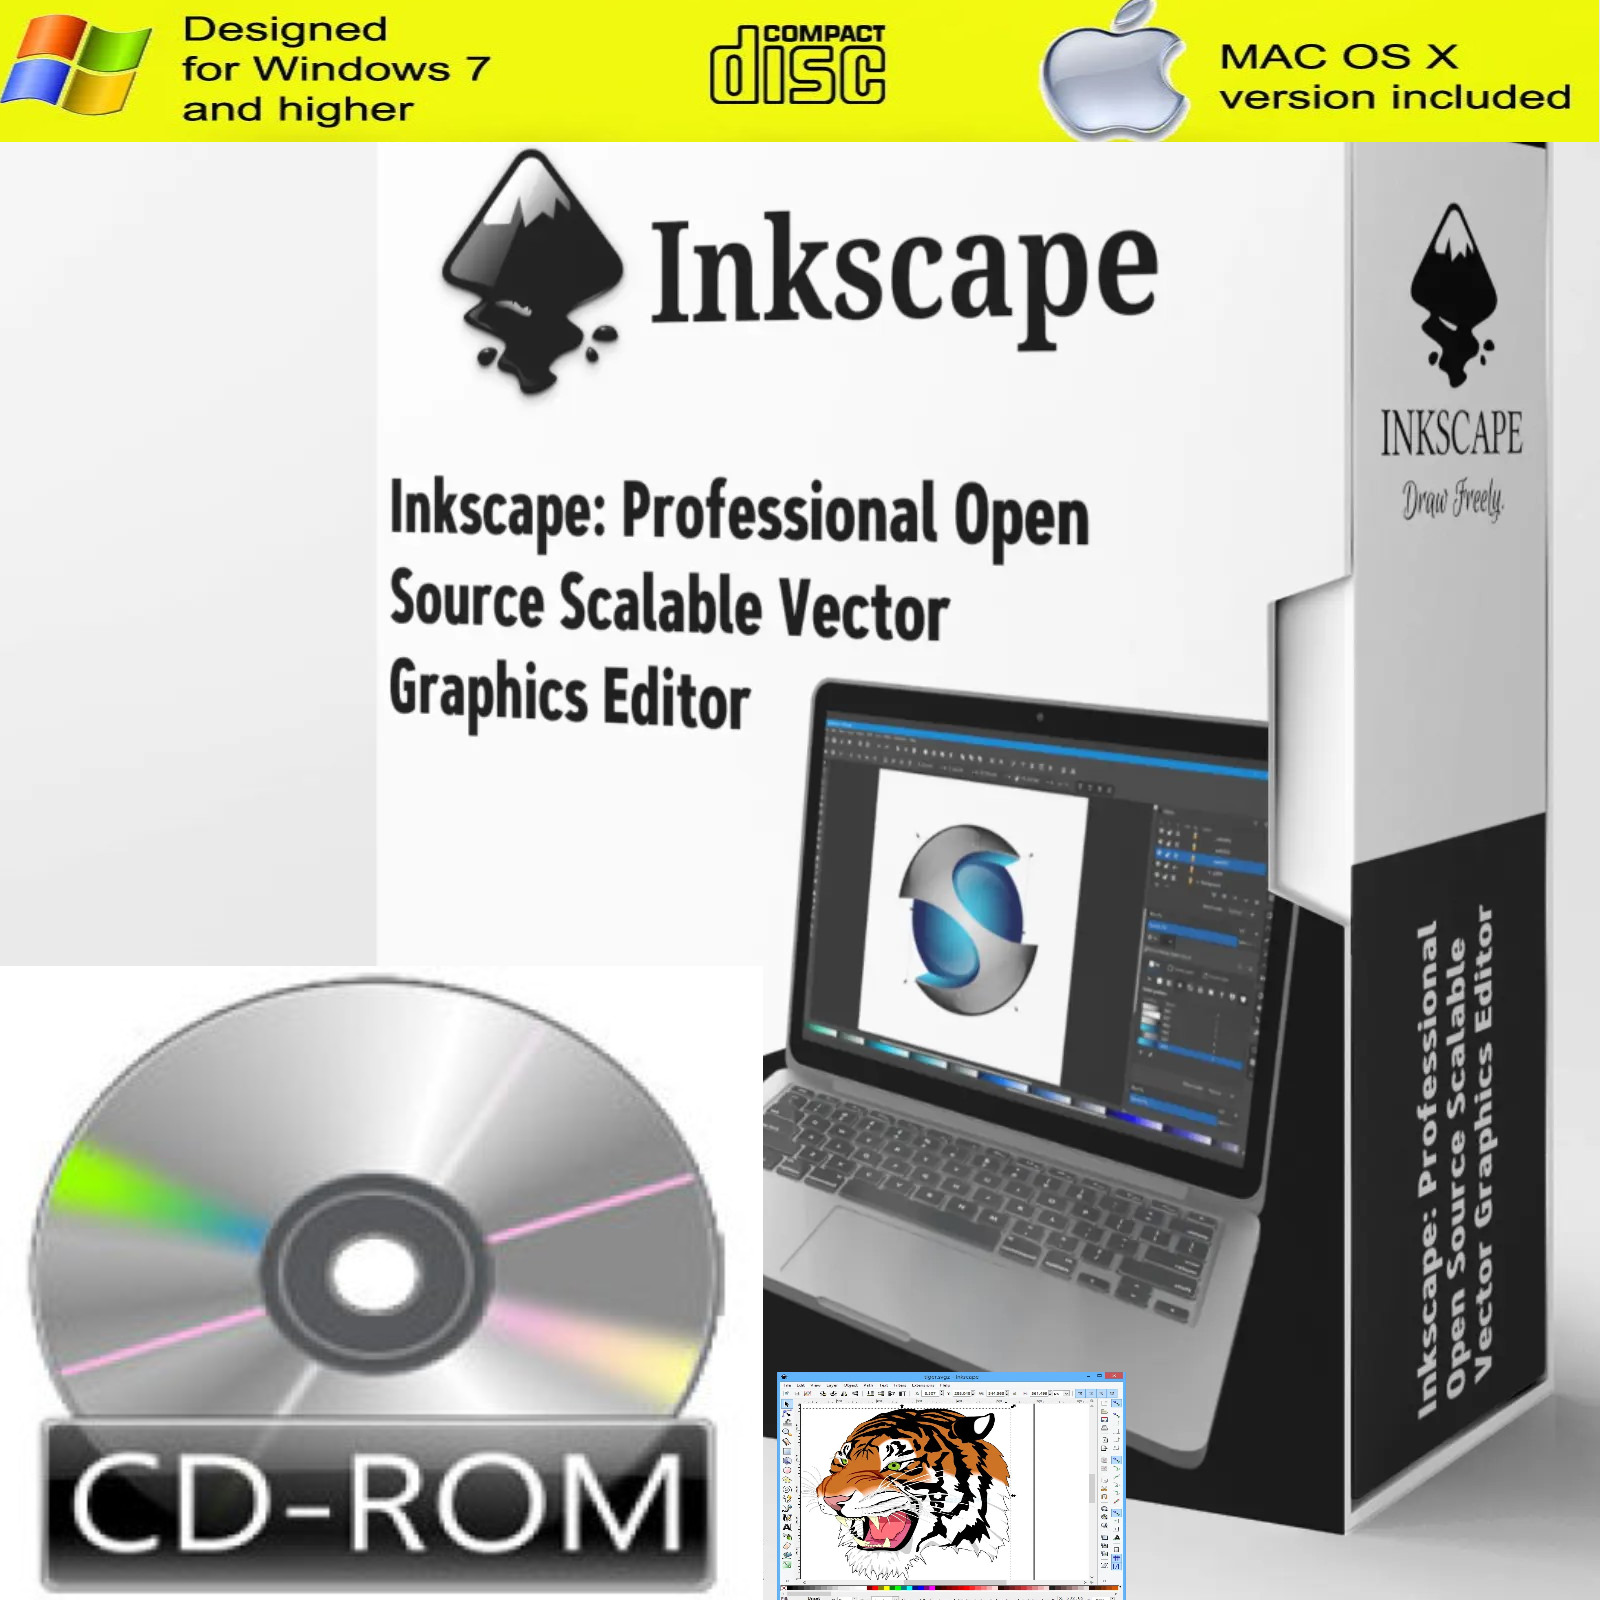 Inkscape Pro Illustrator Vector Graphic Design Software for Windows & Mac on CD